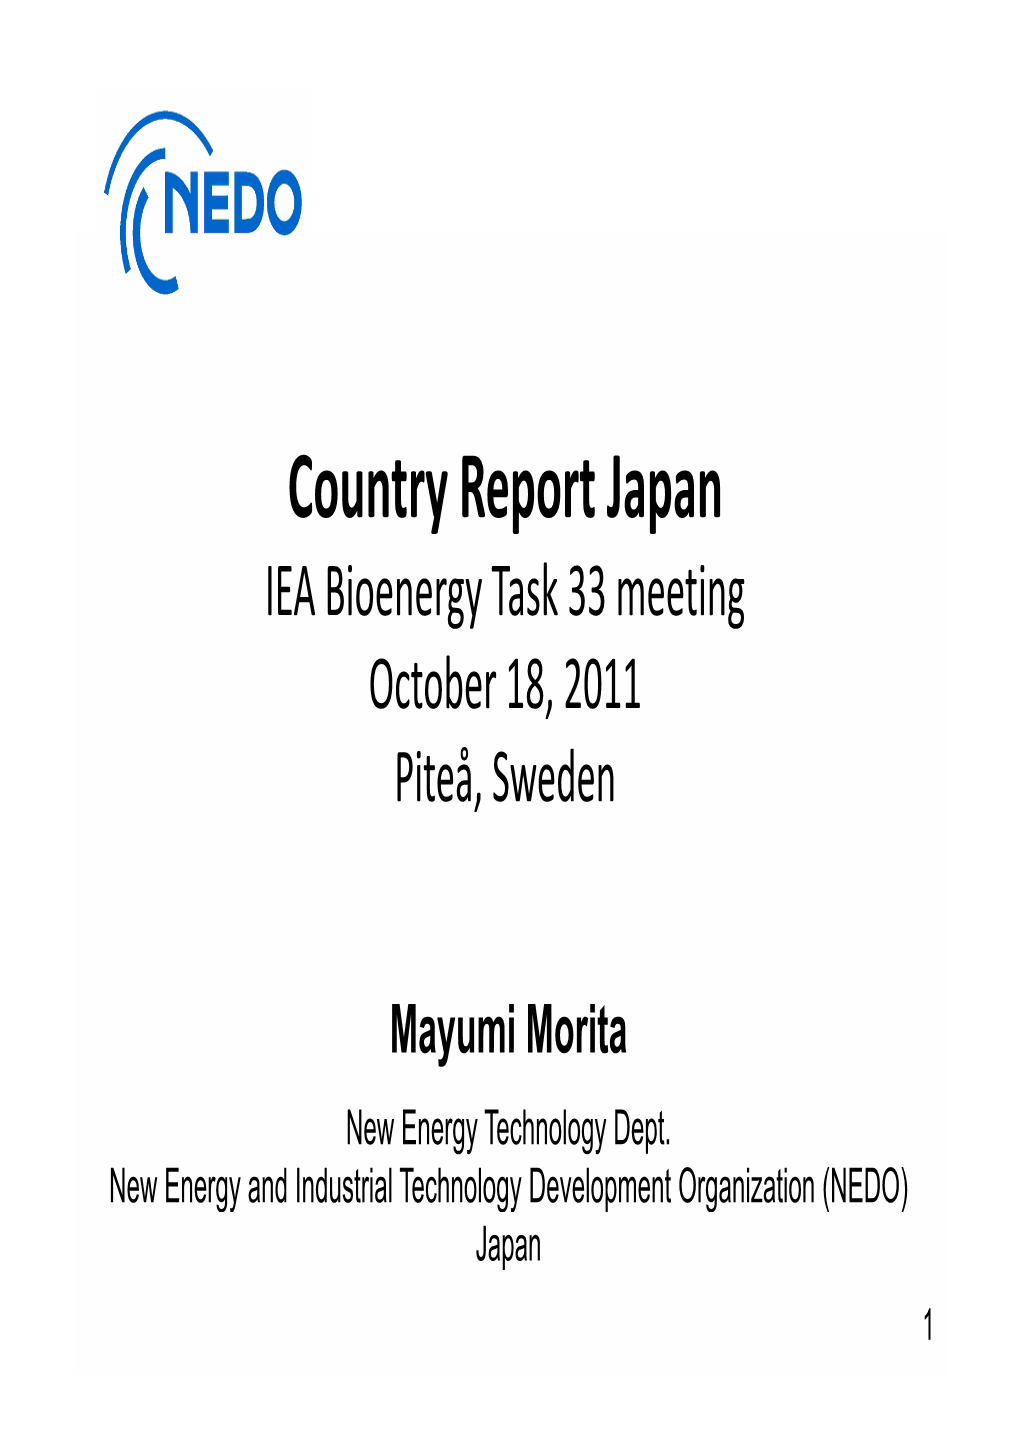 Country Report Japan IEA Bioenergy Task 33 Meeting October 18, 2011 Piteå, Sweden